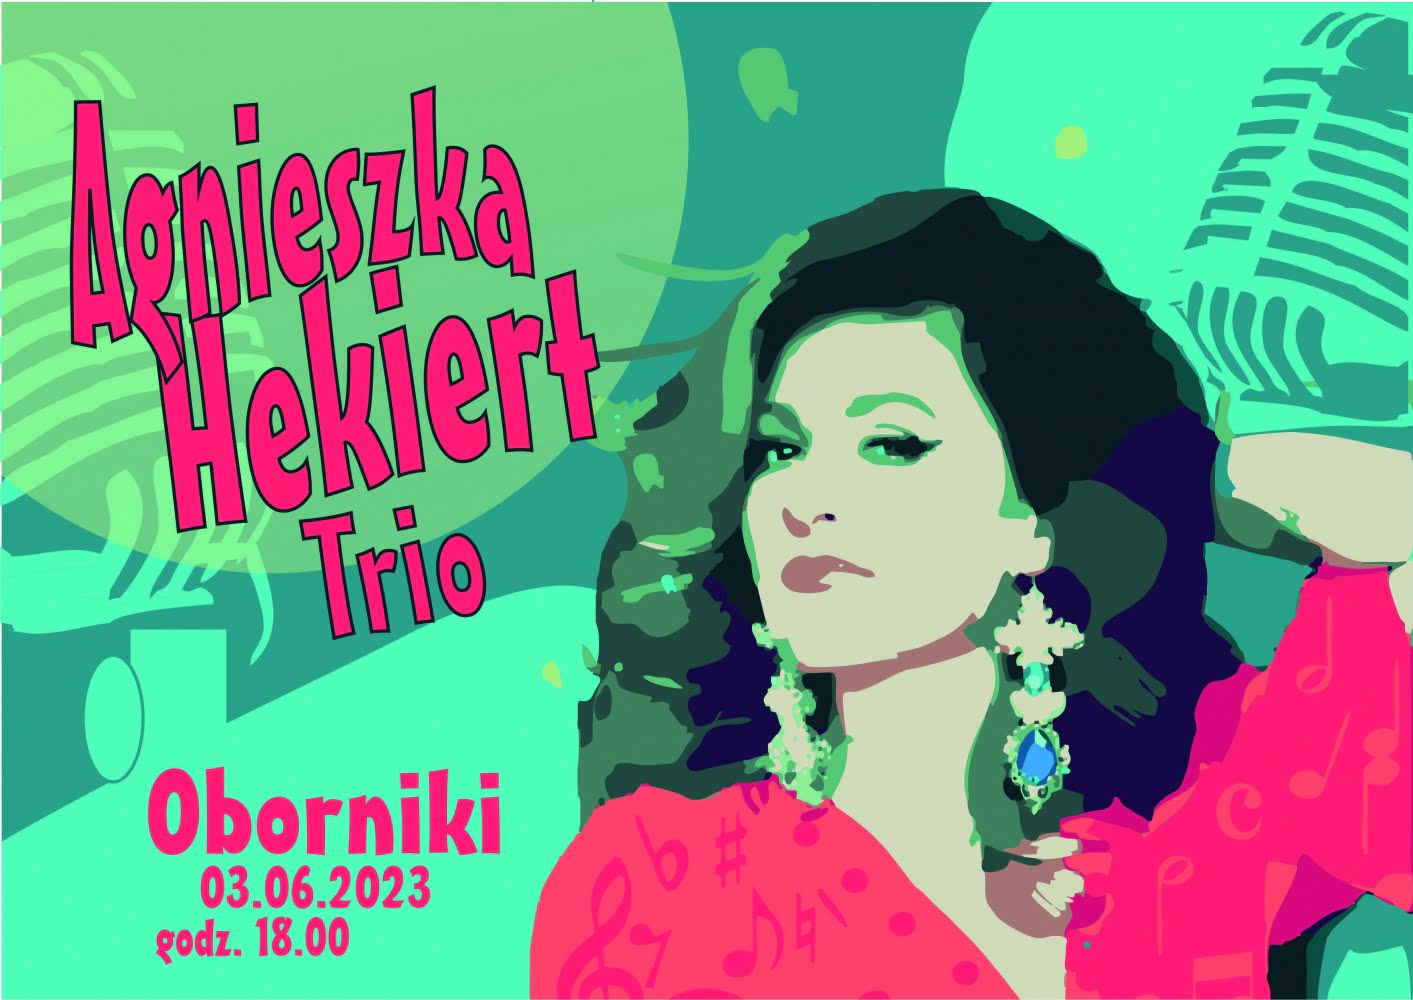 Agnieszka Hekiert Trio (470299)